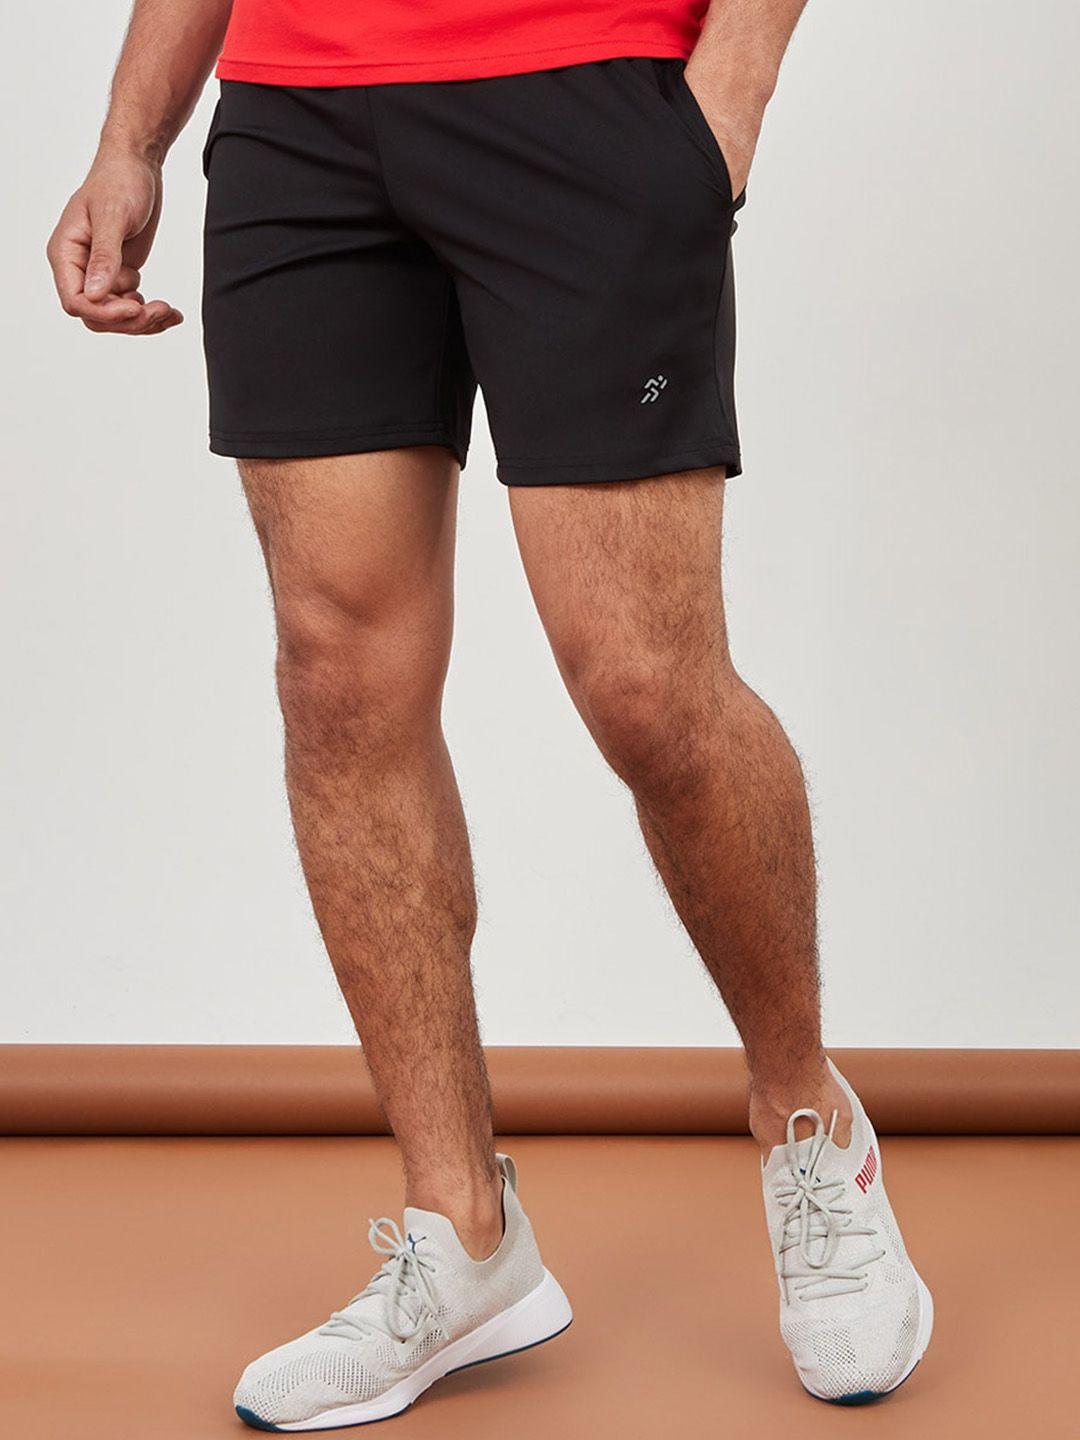 styli-men-slim-fit-running-sports-shorts